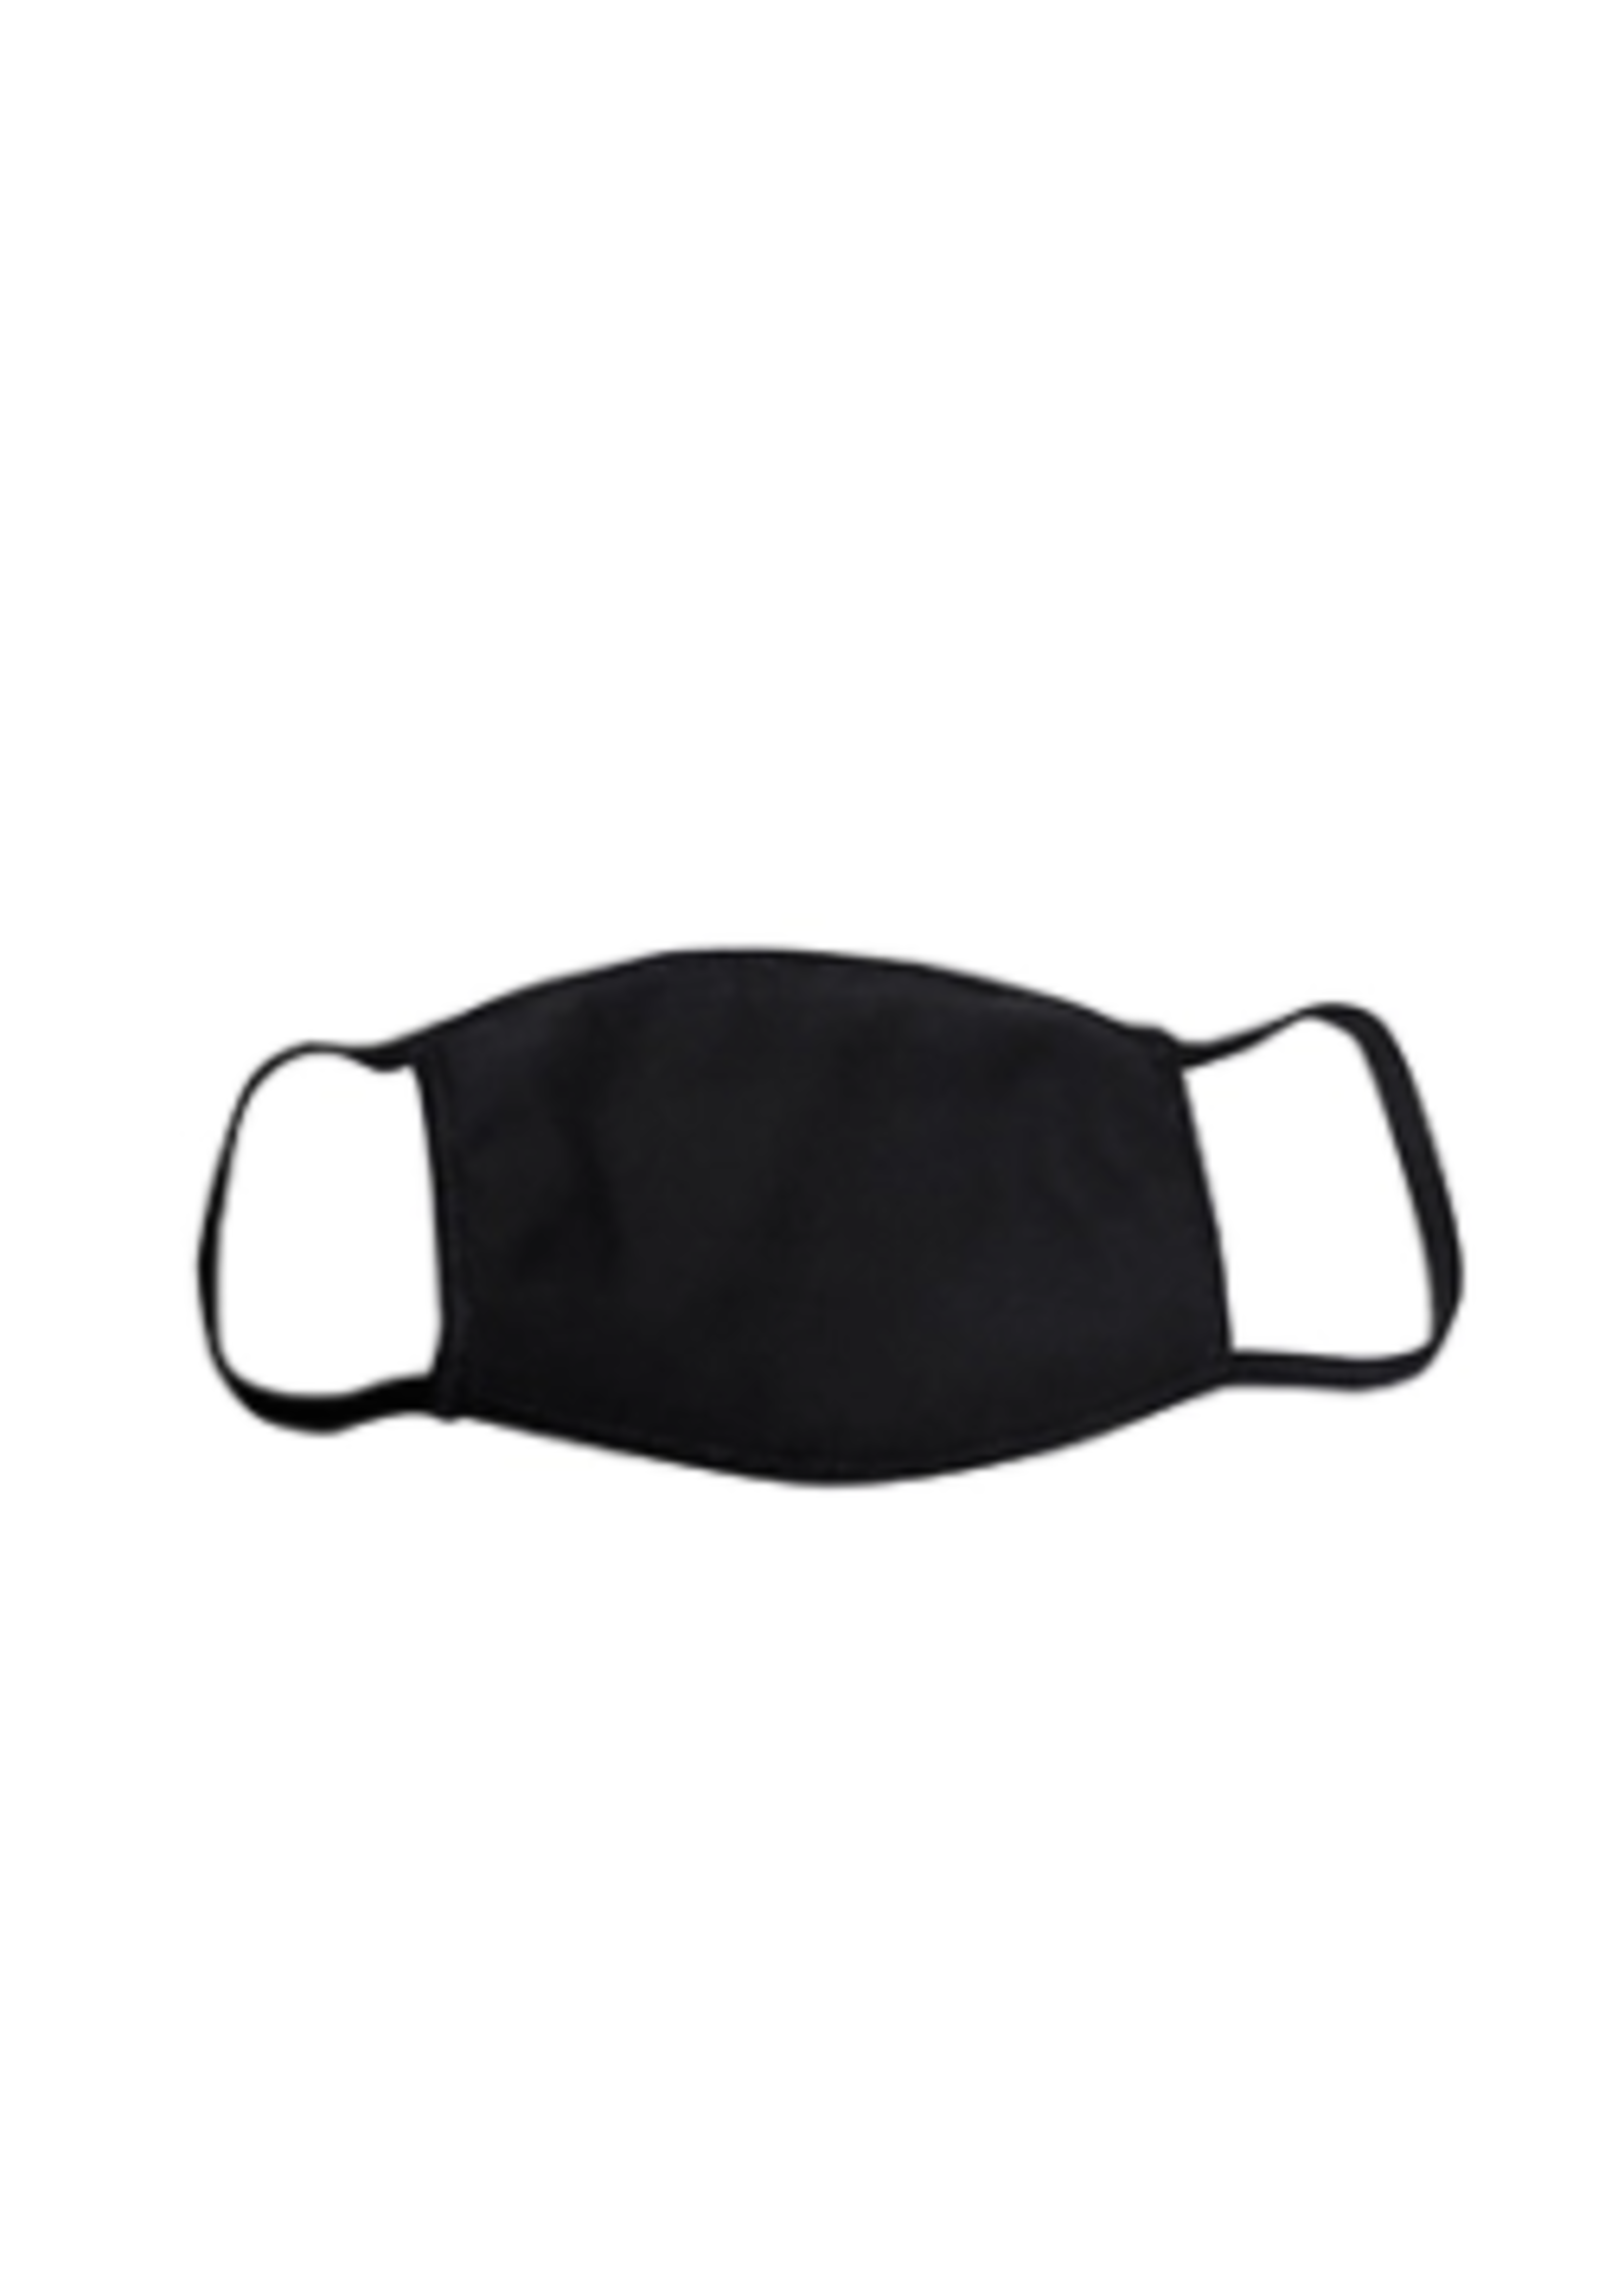 UNIFORM Mask - Guardian Face Shield, solid black